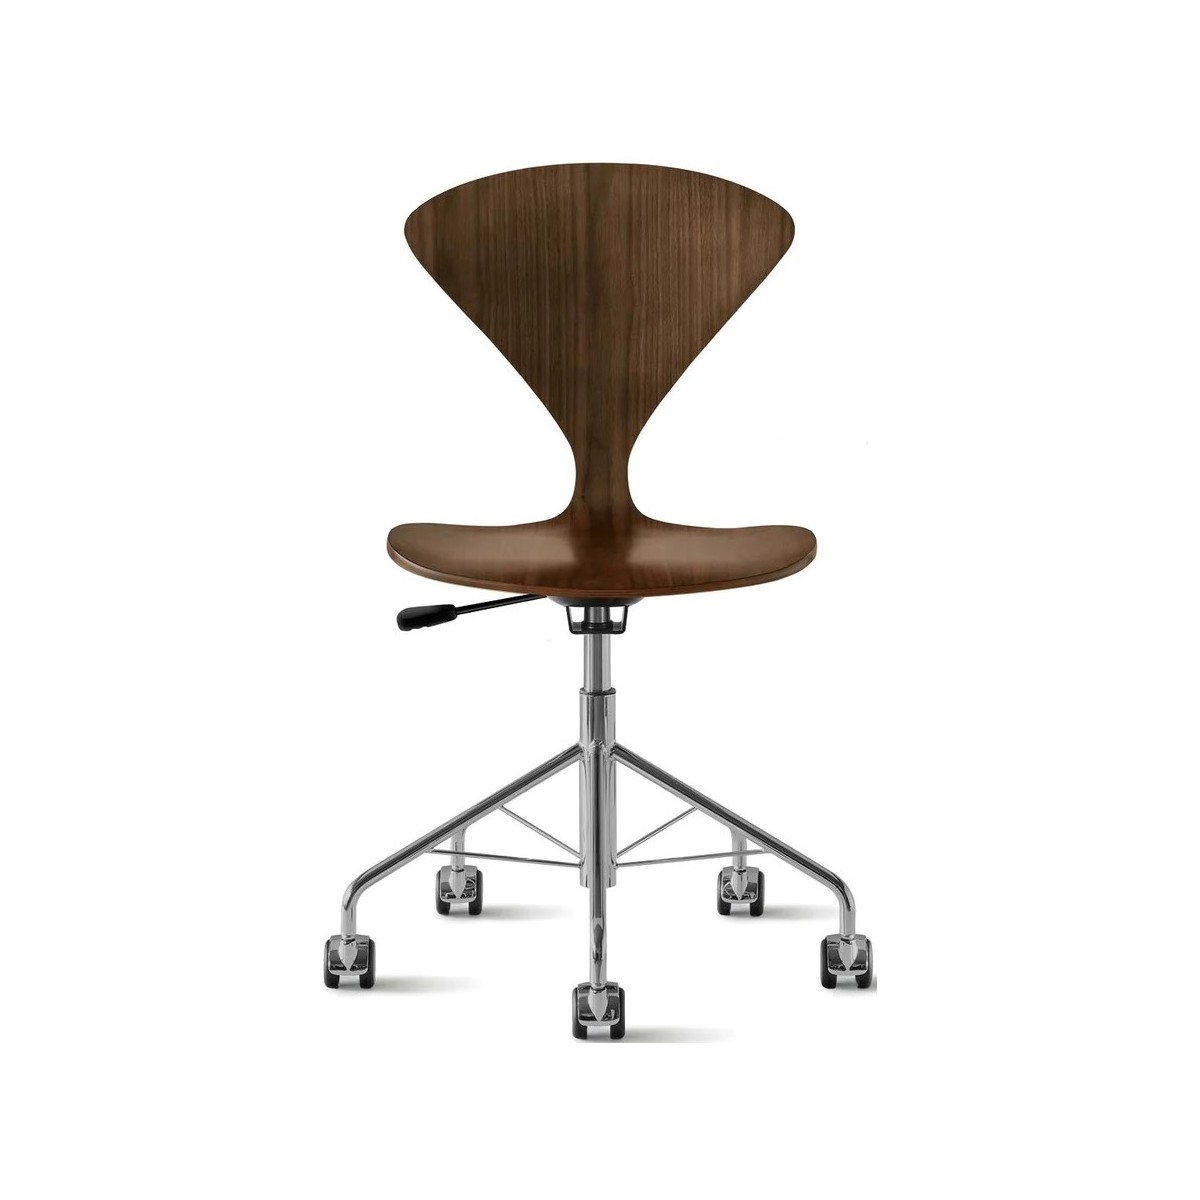 classic walnut - Cherner task chair